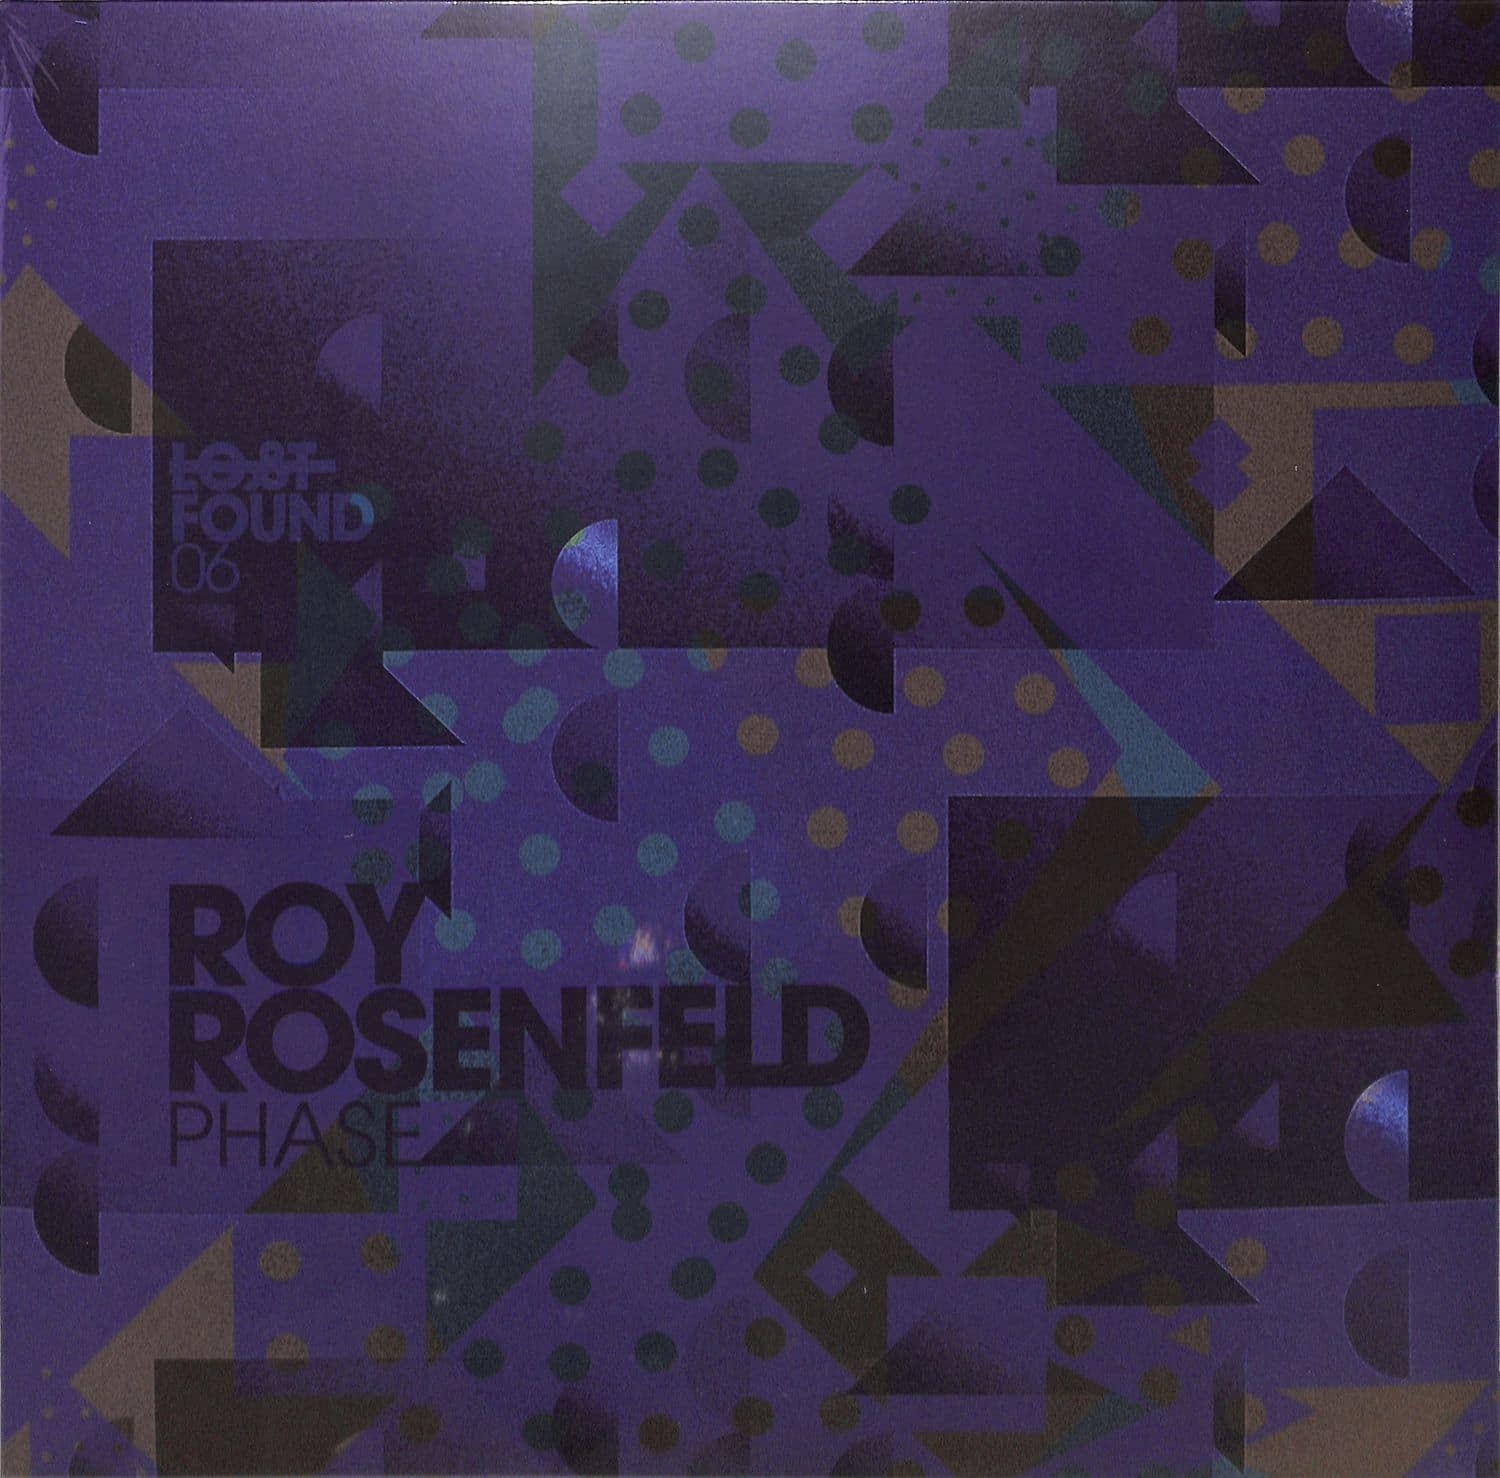 Roy Rosenfeld - PHASE